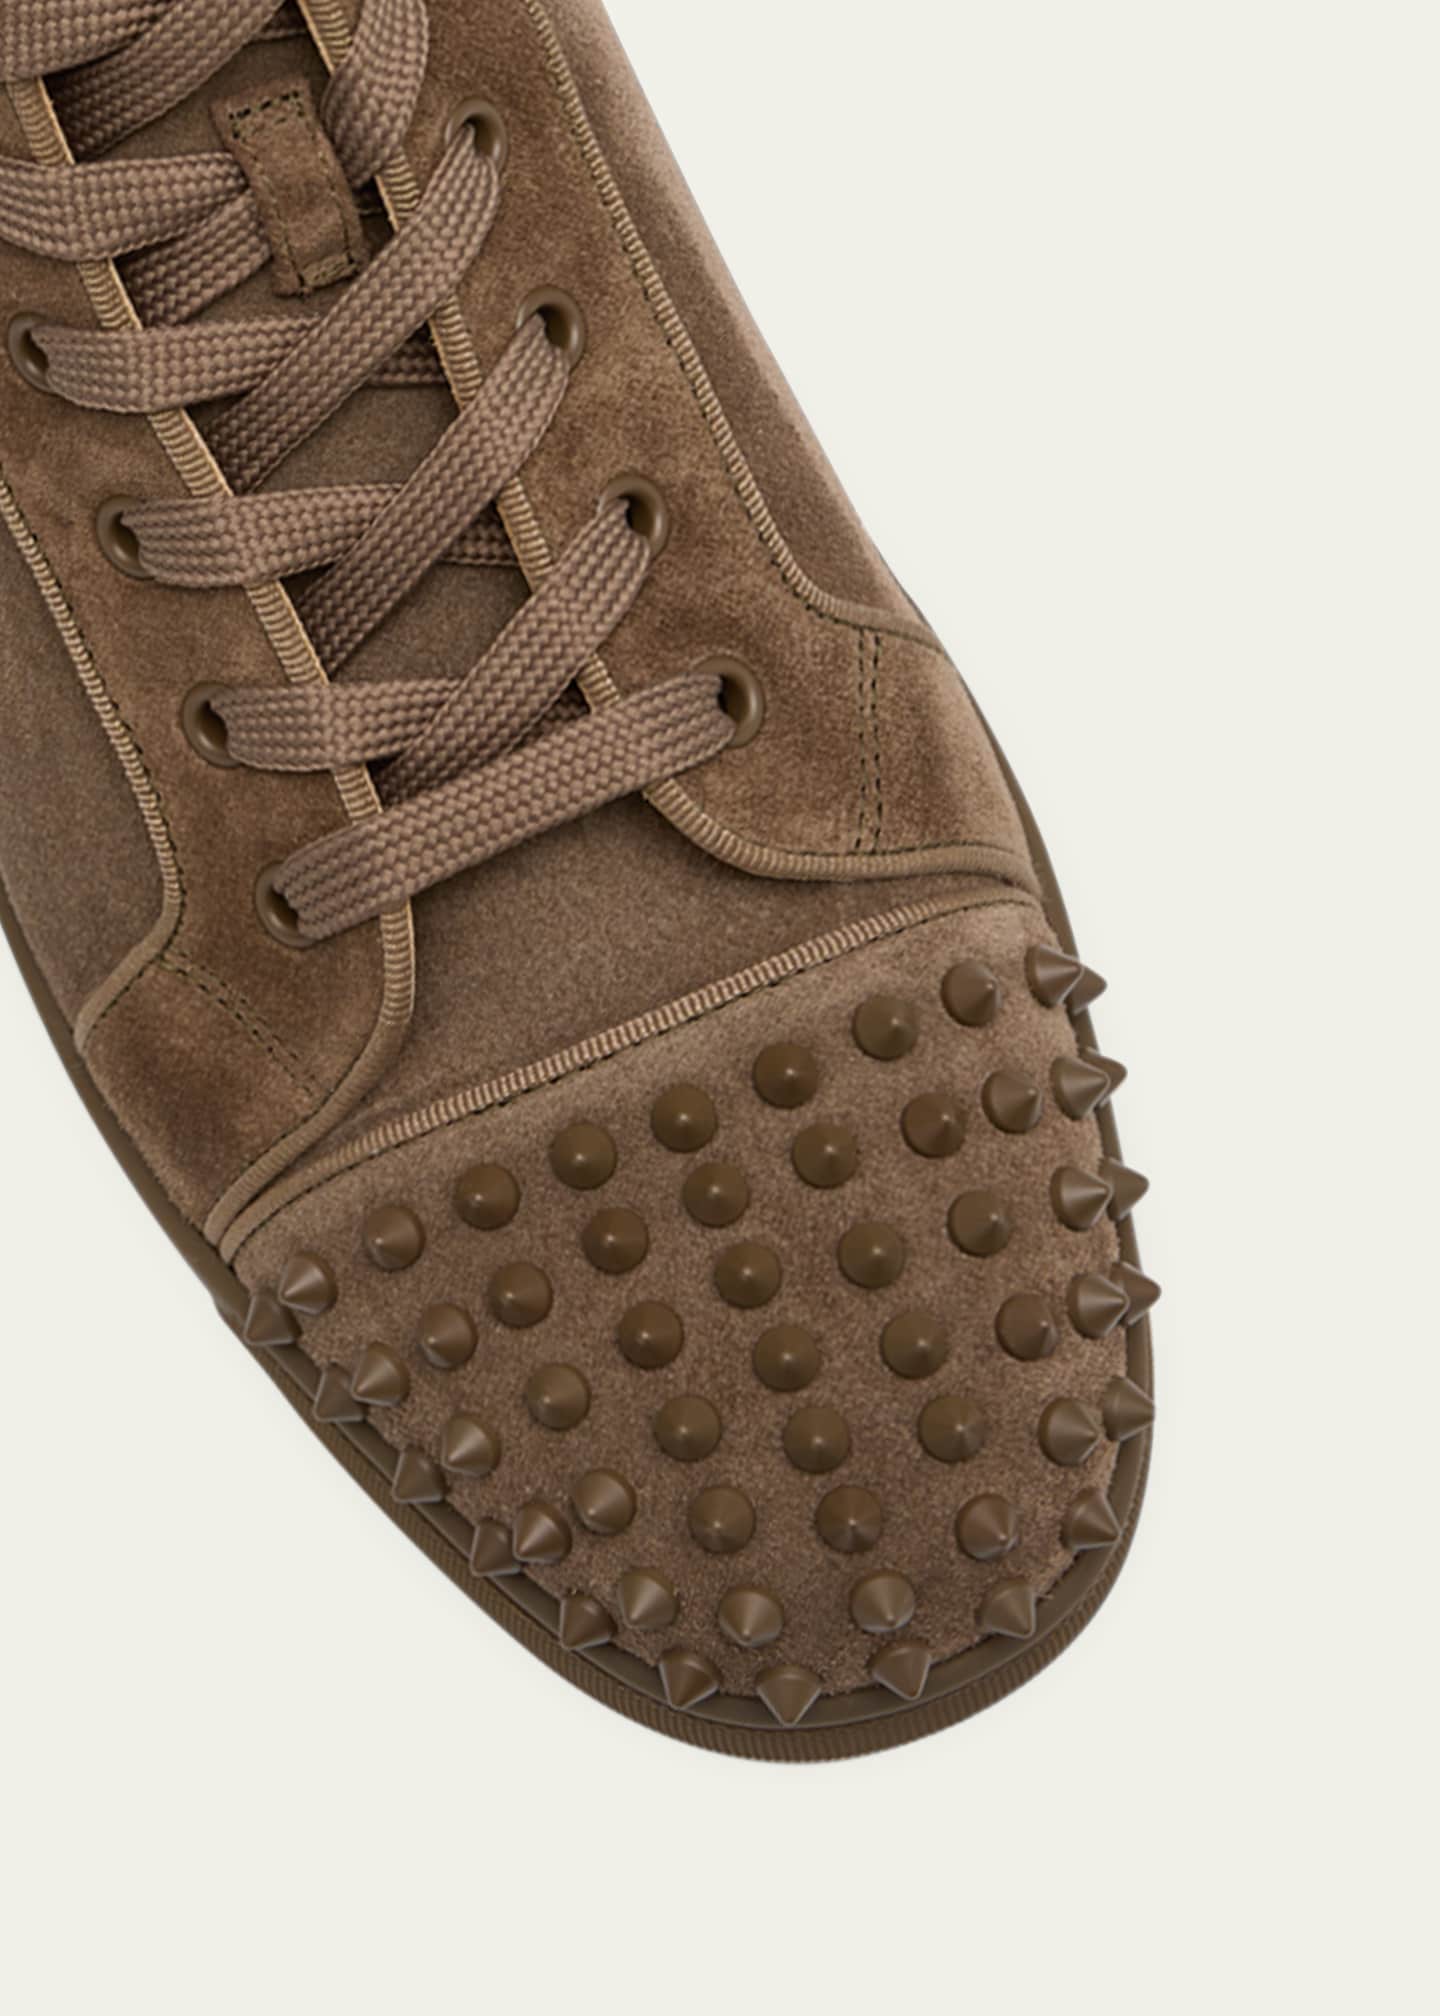 Christian Louboutin Lou Spikes Sneakers in Brown | MTYCI